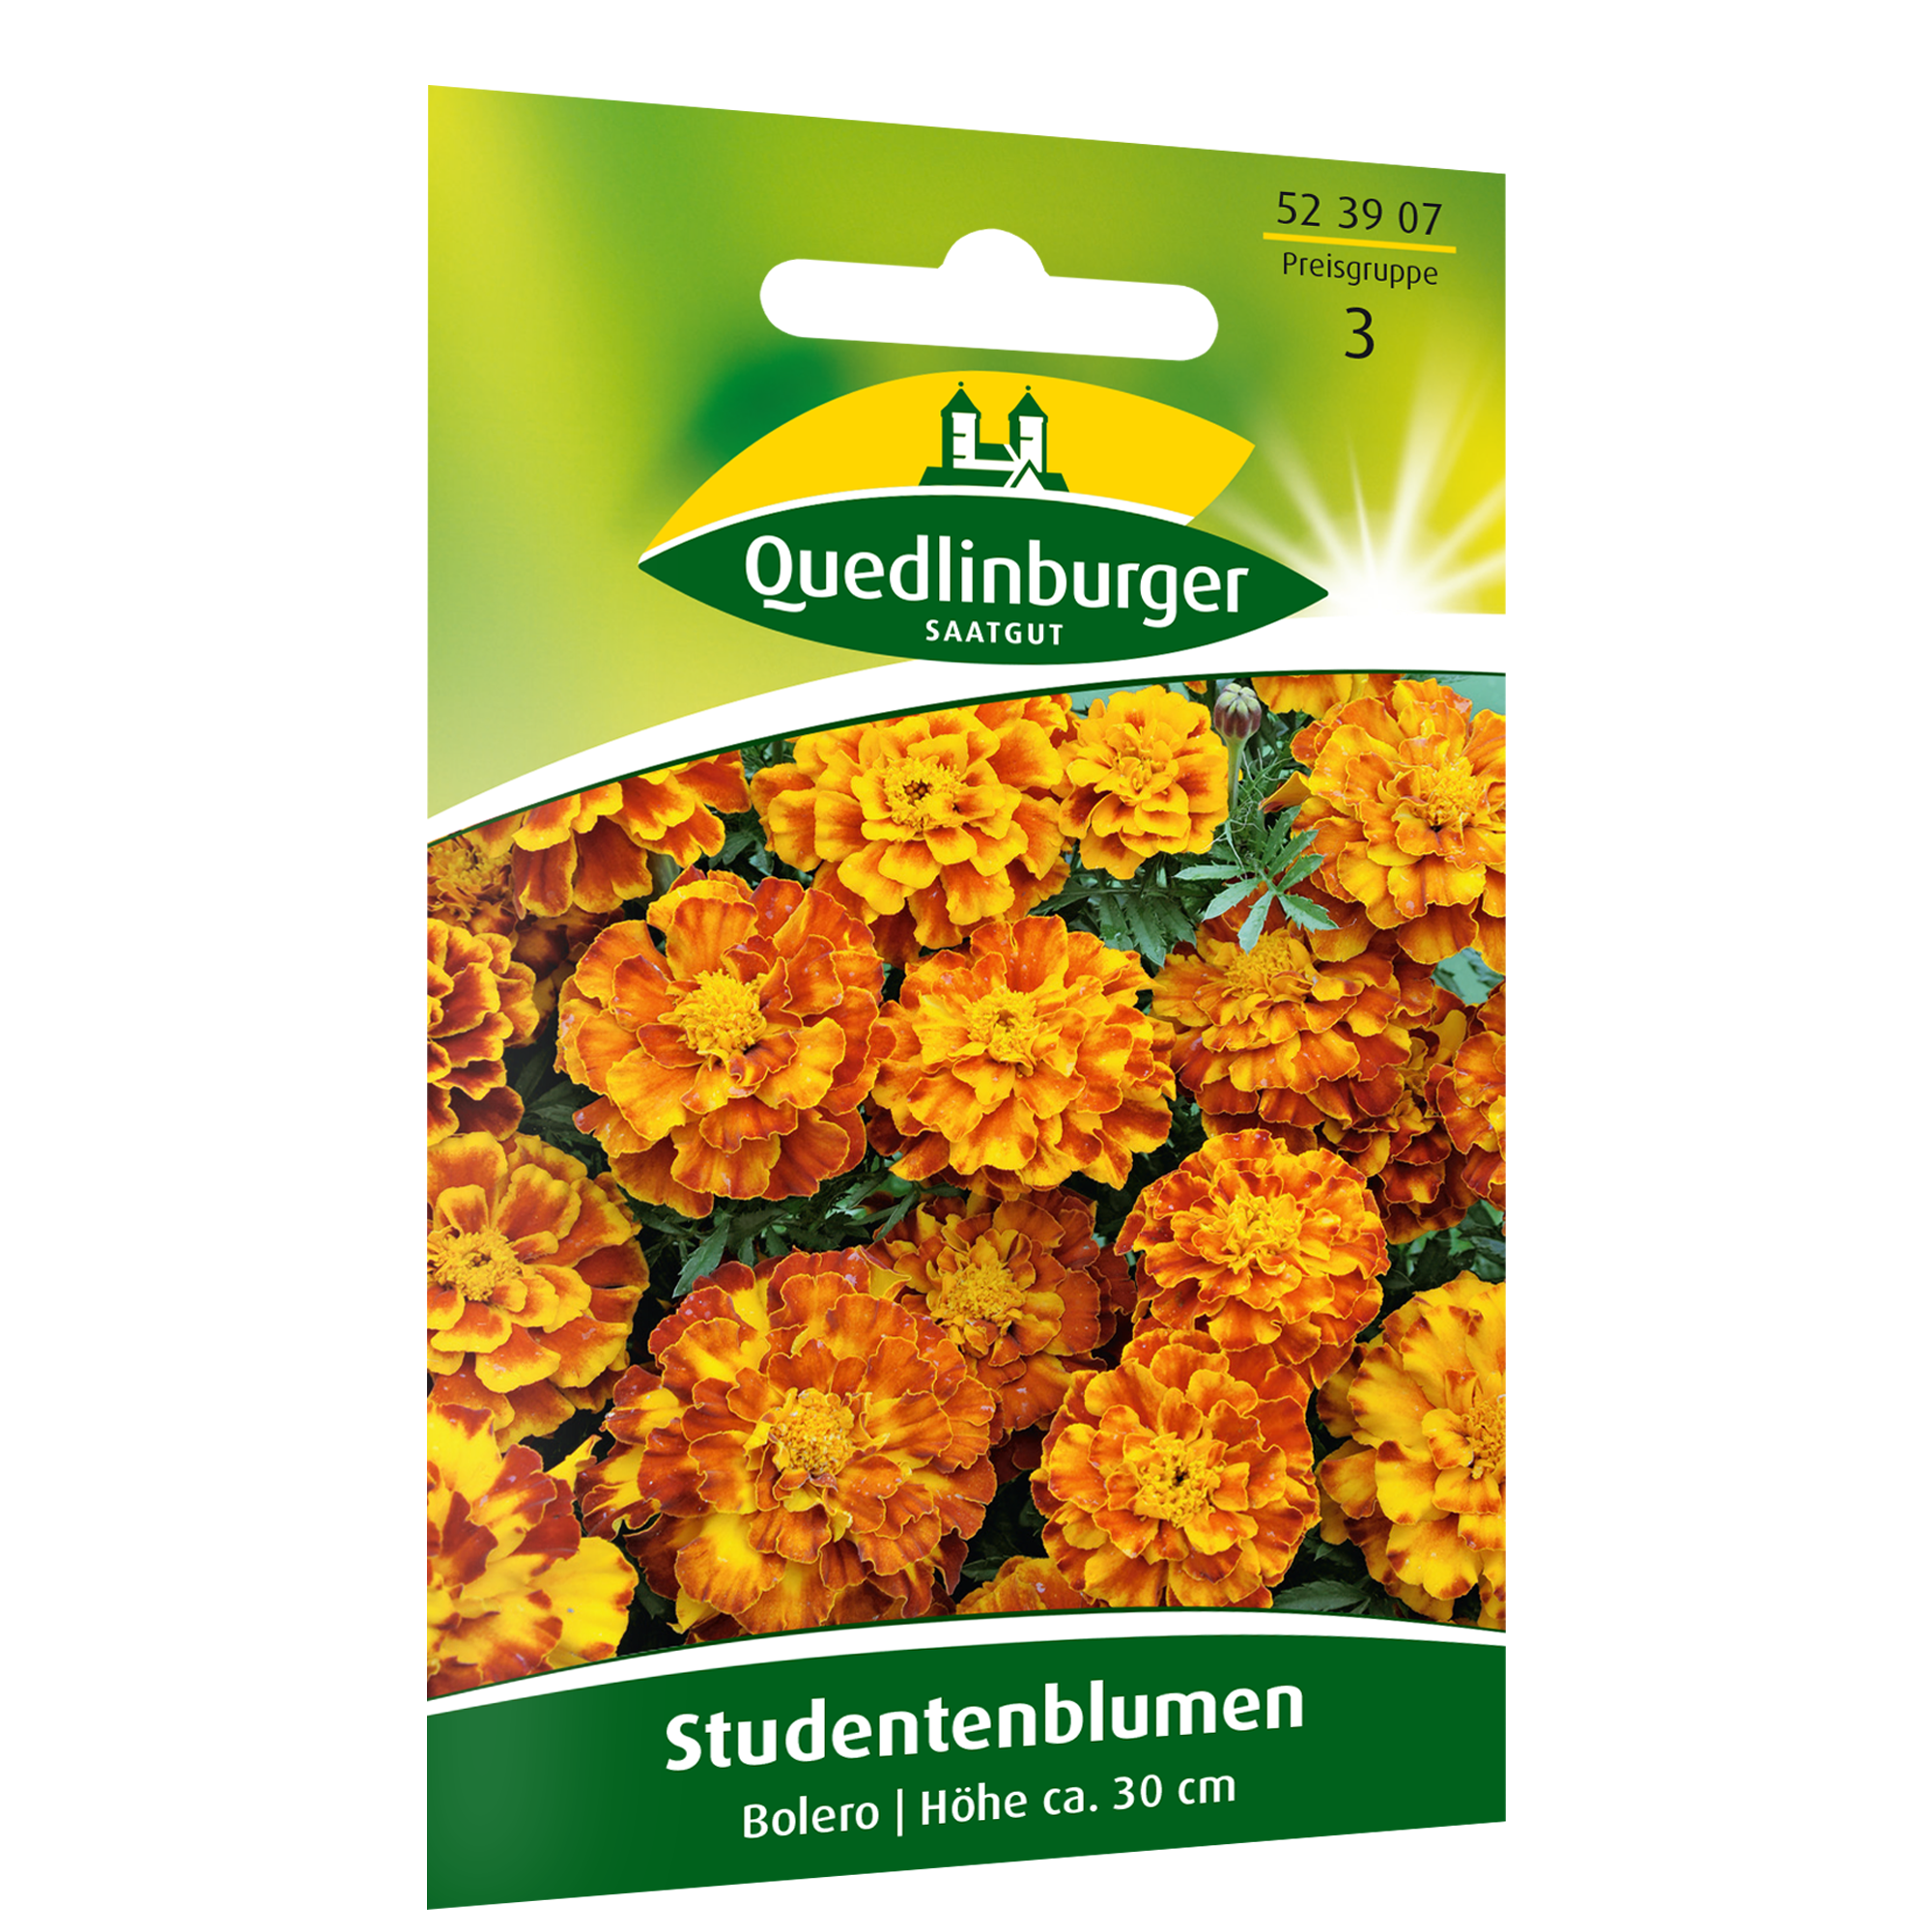 Studentenblumen 'Bolero' + product picture